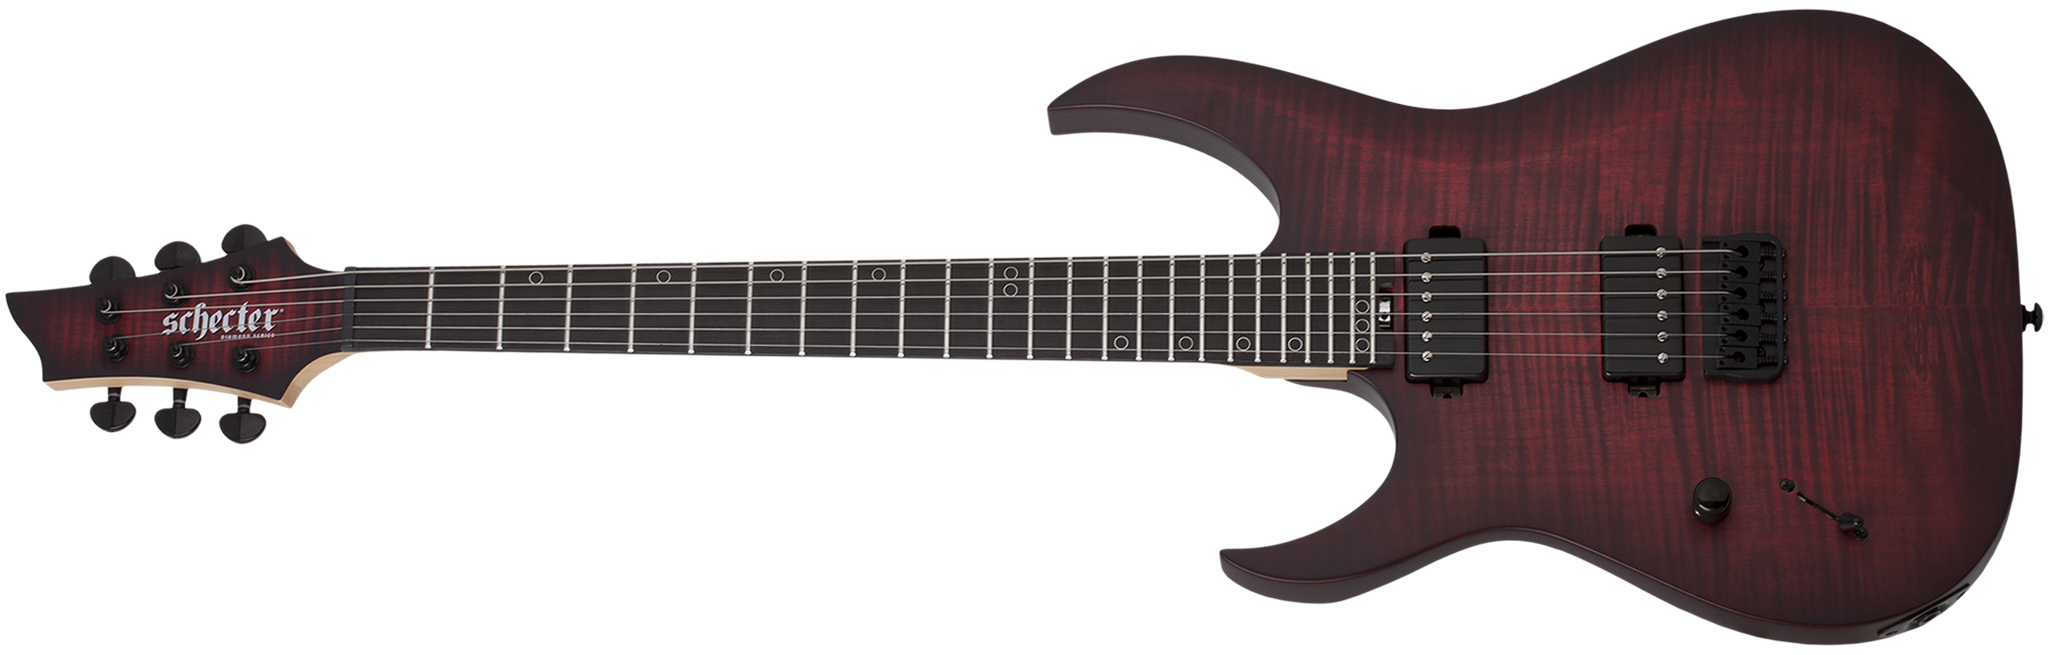 Schecter DIAMOND SERIES Sunset-6 Extreme Scarlet Burst  Left Handed    6-String Electric Guitar